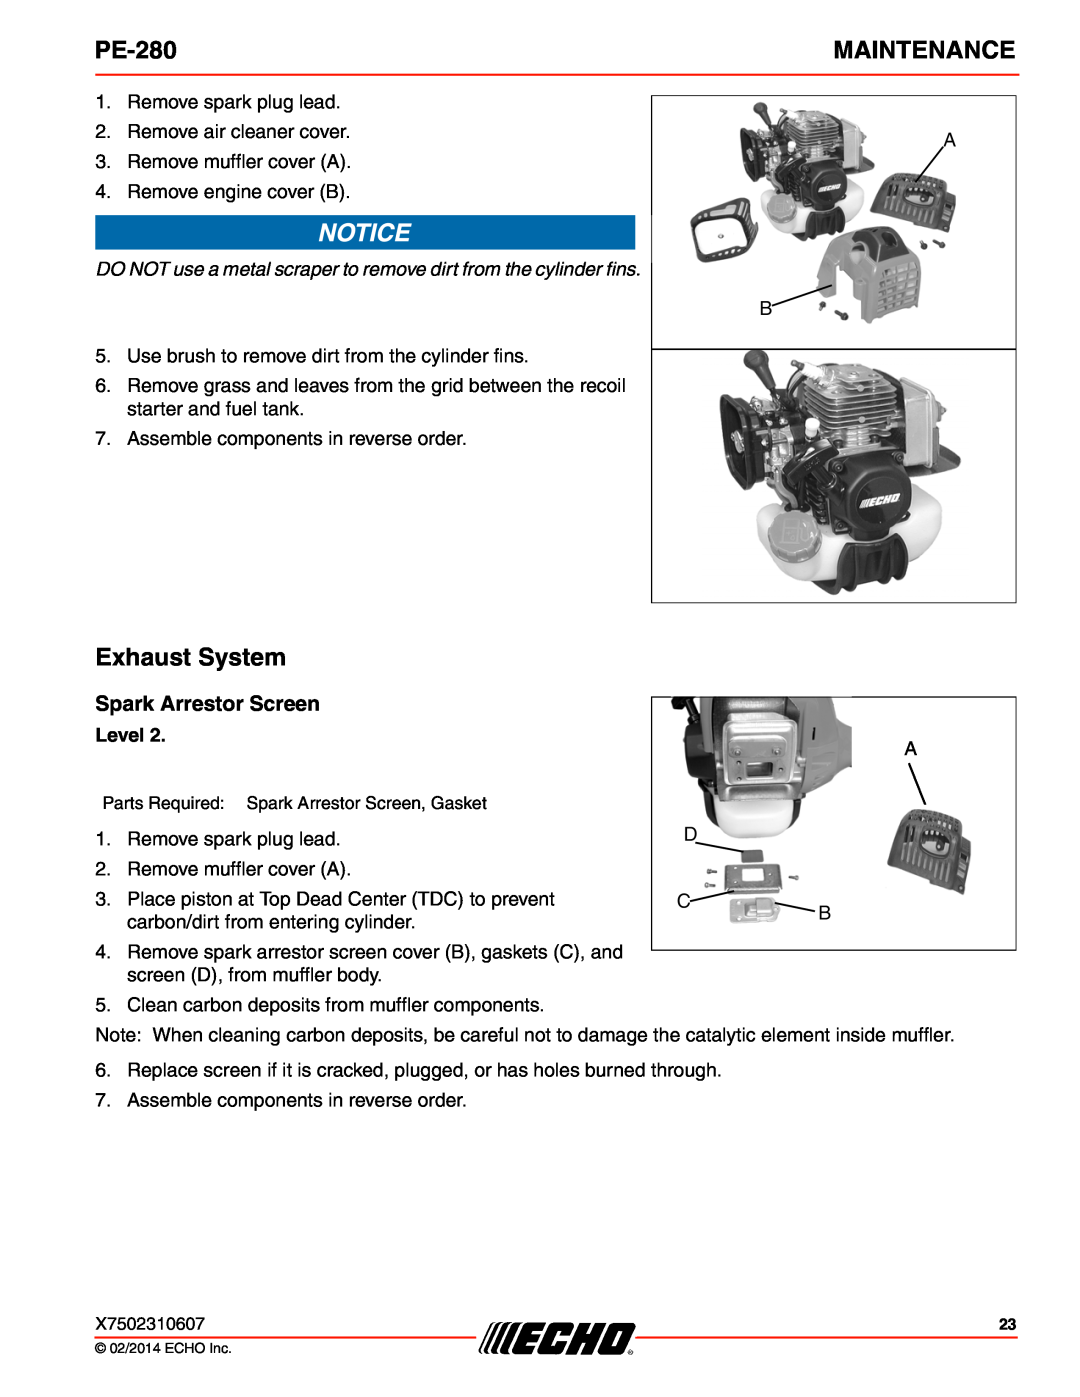 Echo PE-280 specifications Exhaust System, Spark Arrestor Screen, Maintenance, Level 